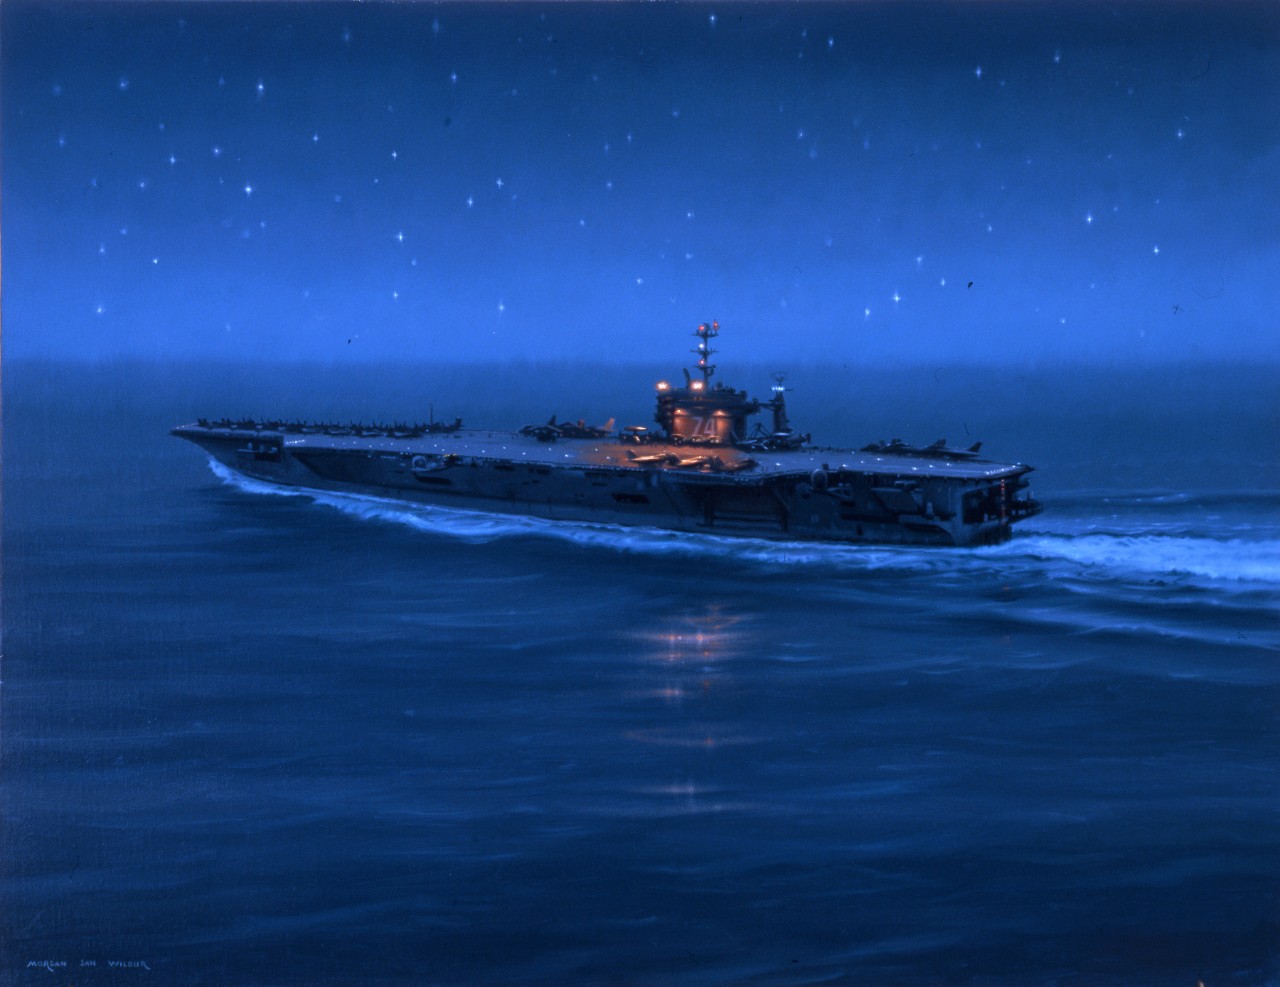 An aircraft carrier at night